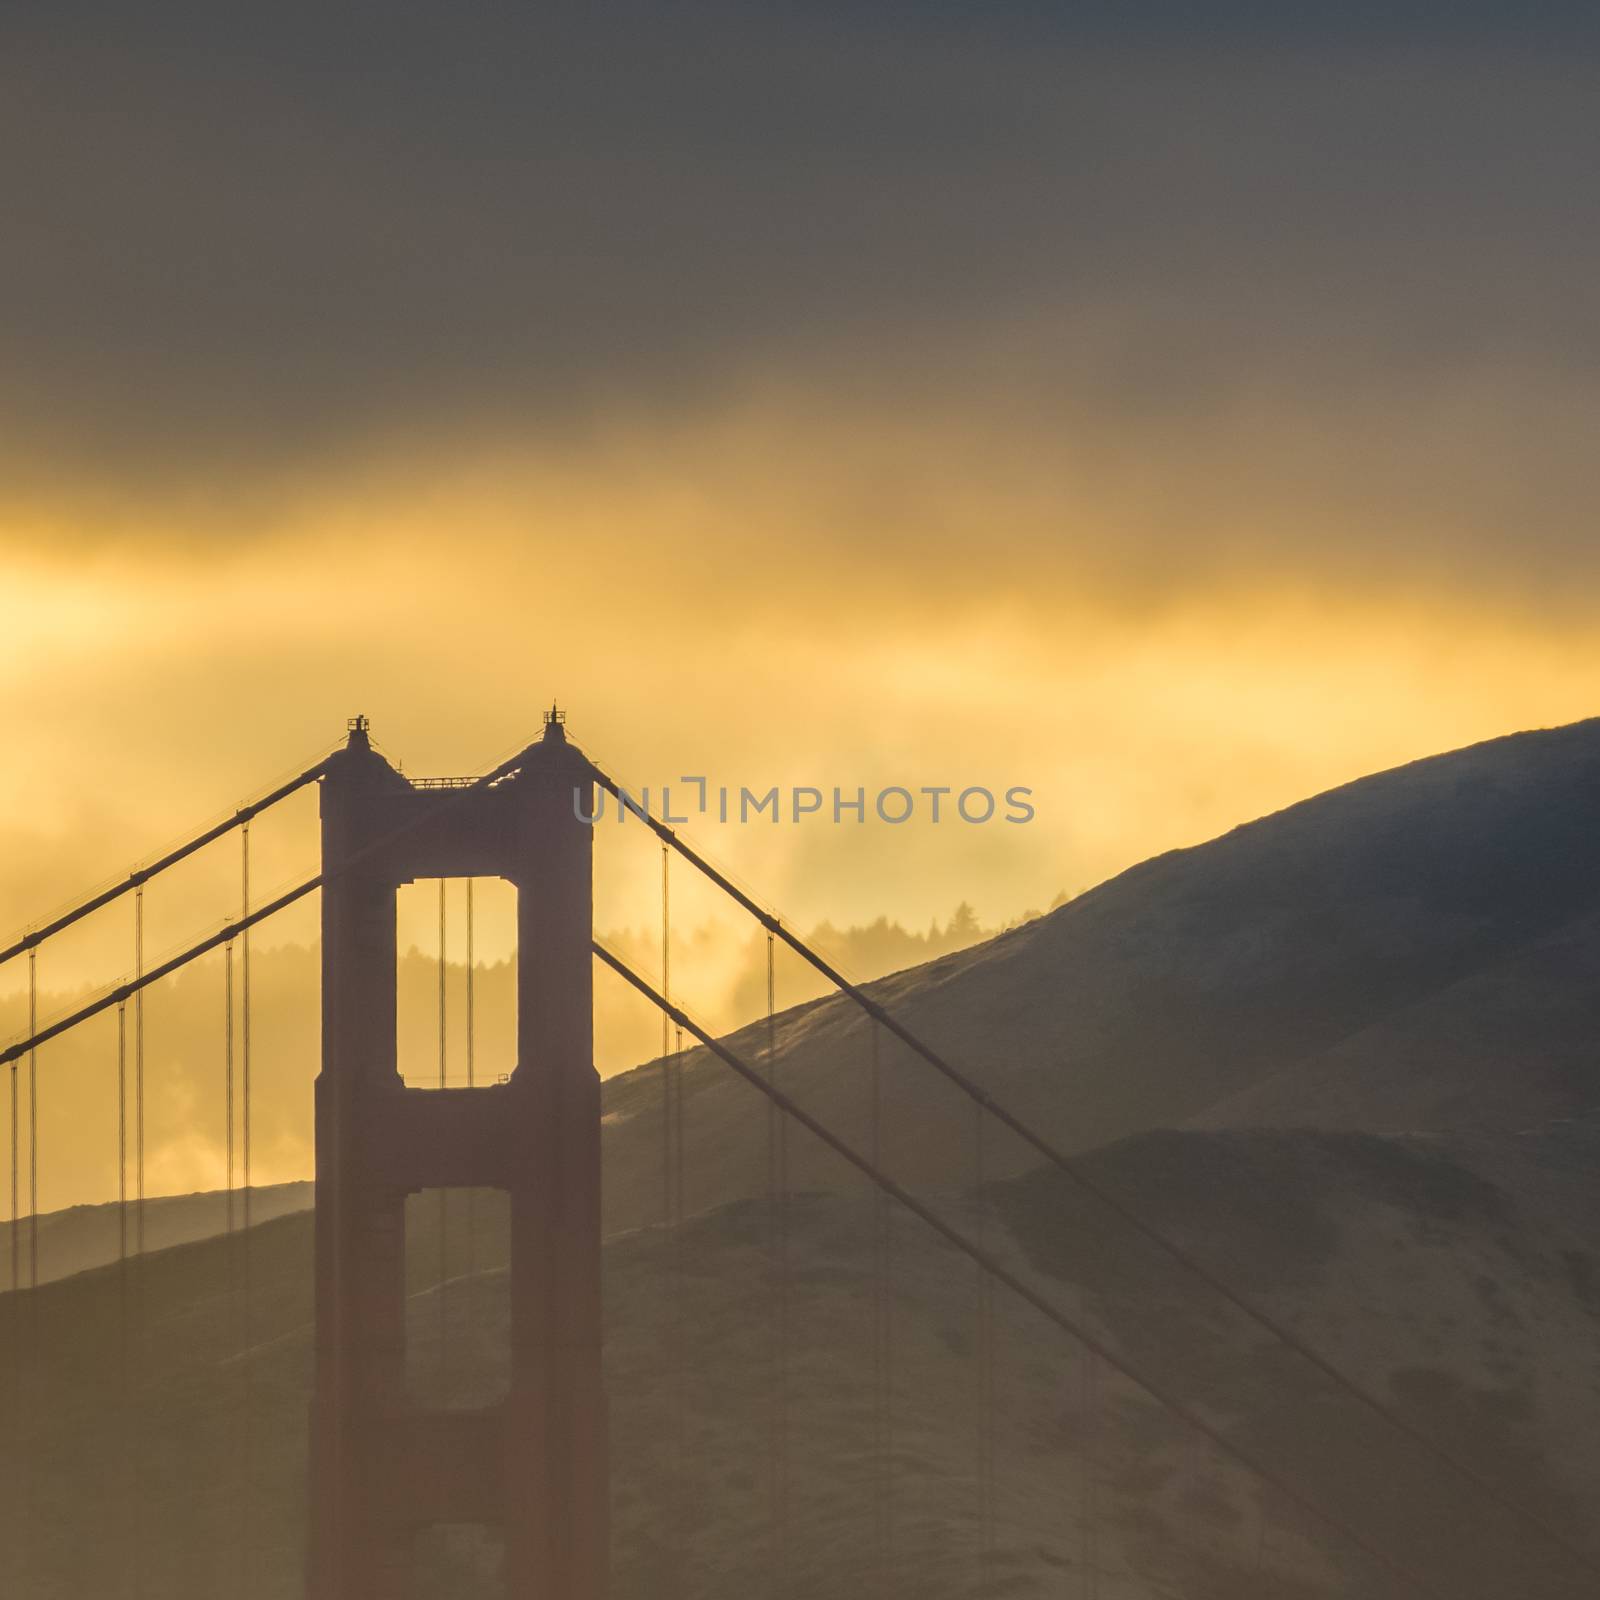 Detail Of The Golden Gate Bridge In San Francisco At Sunset